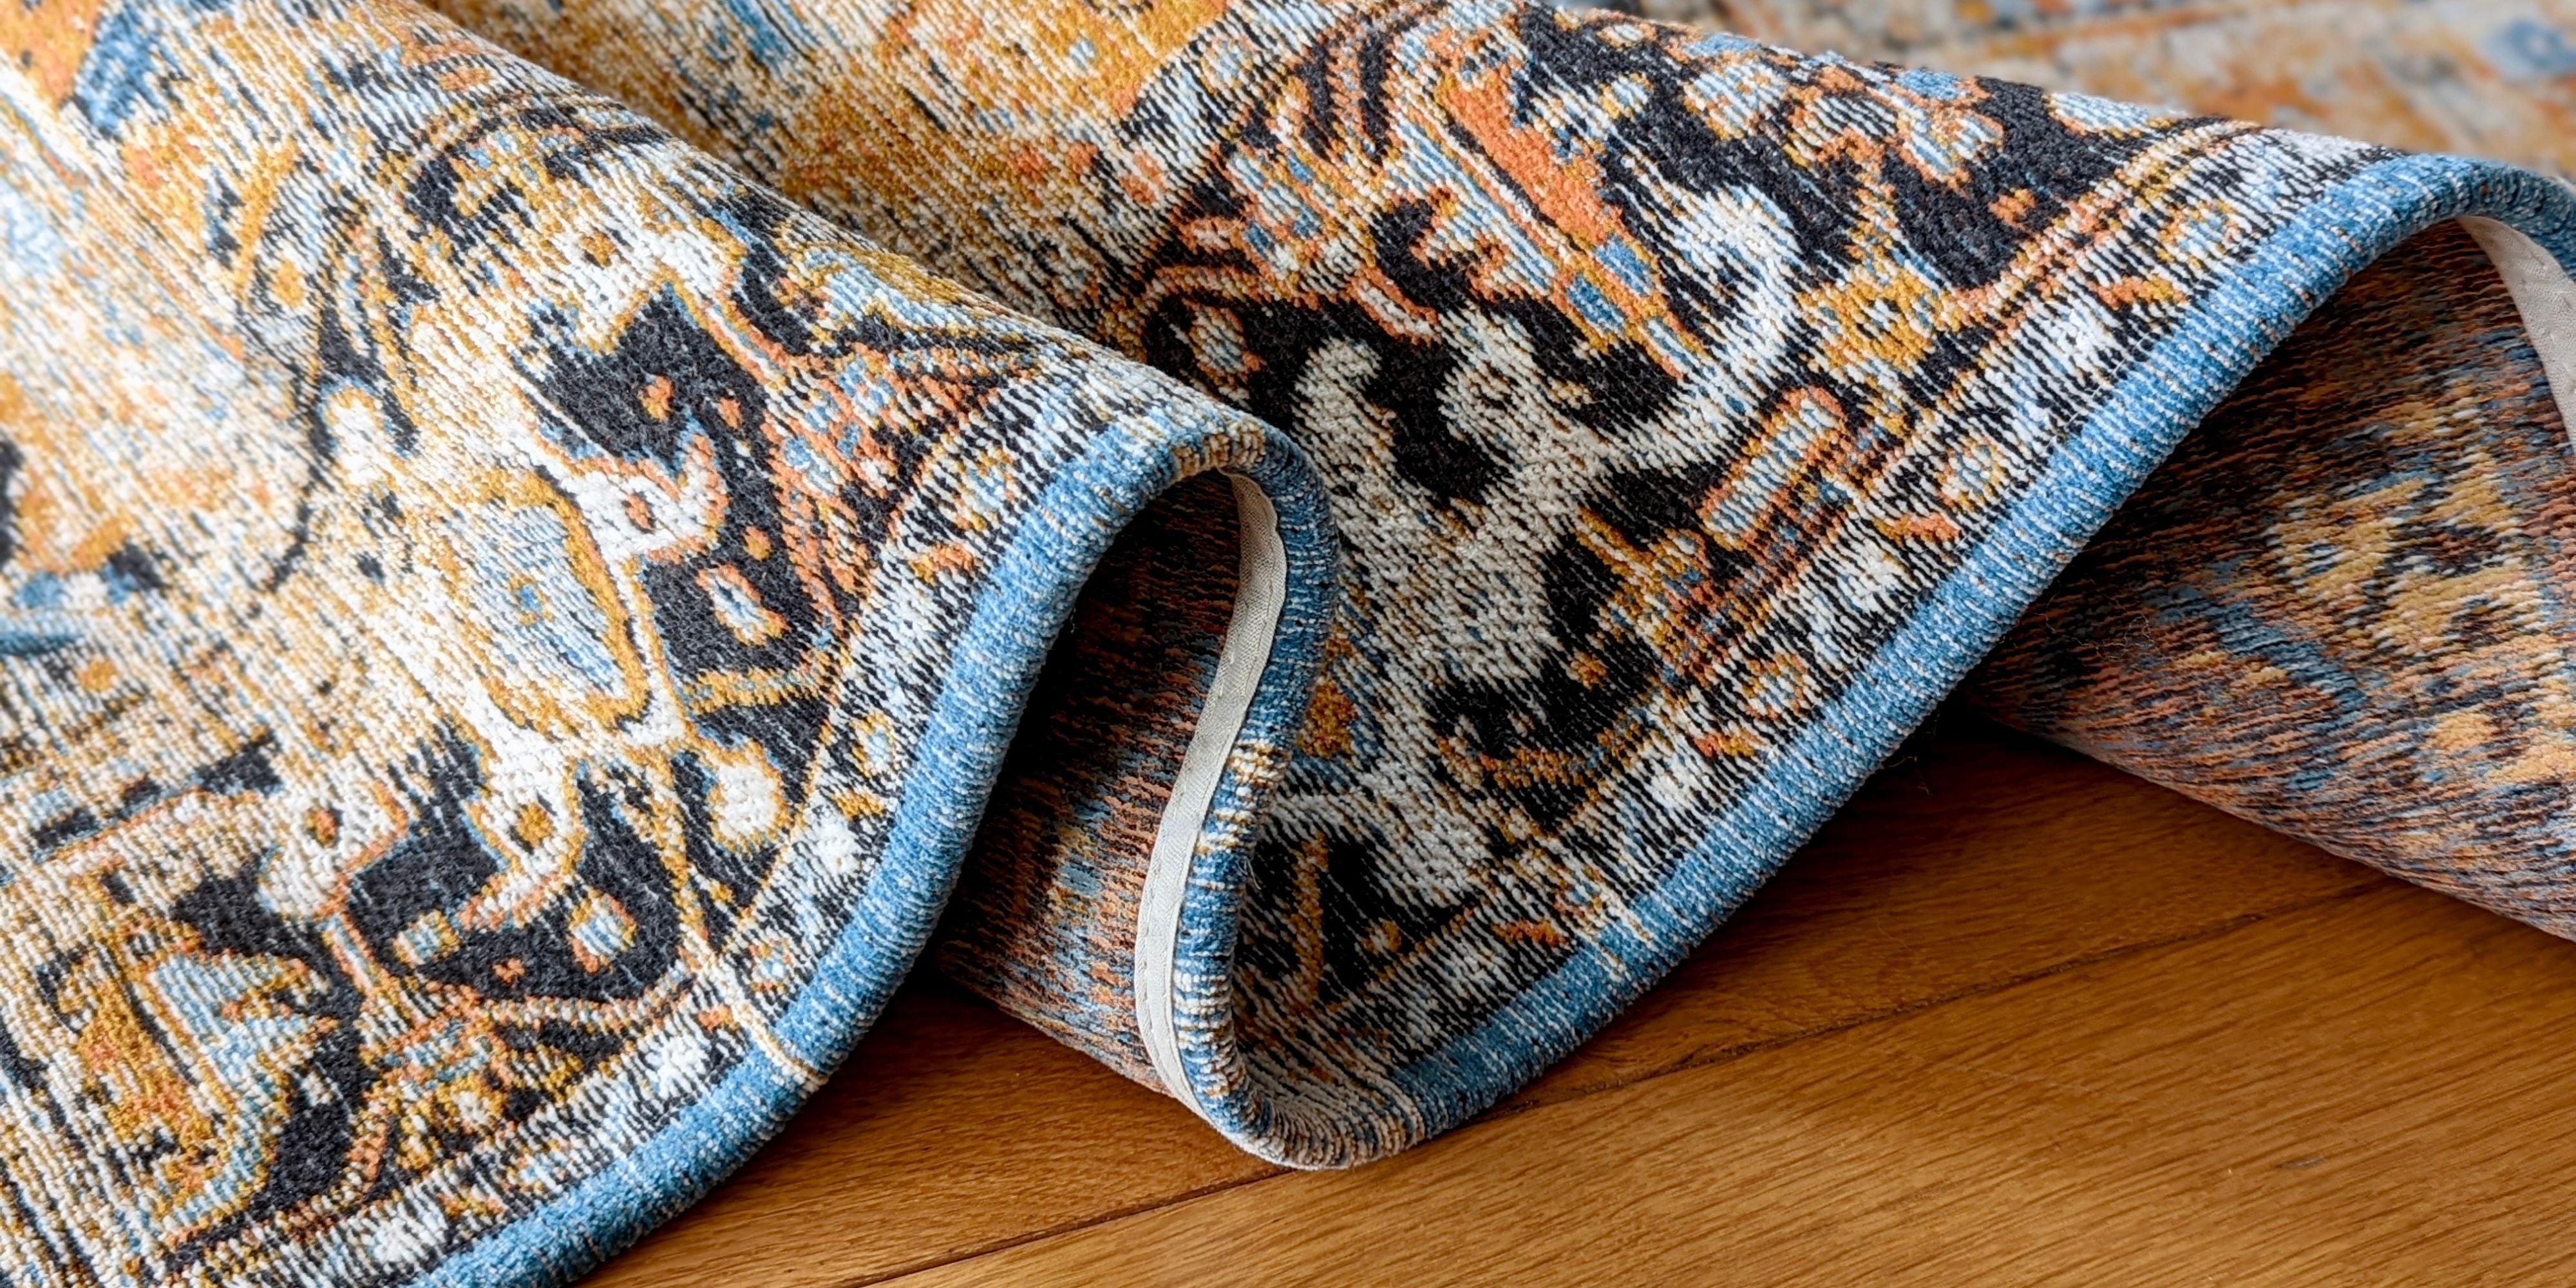 Vintage & Persian Inspired Rugs